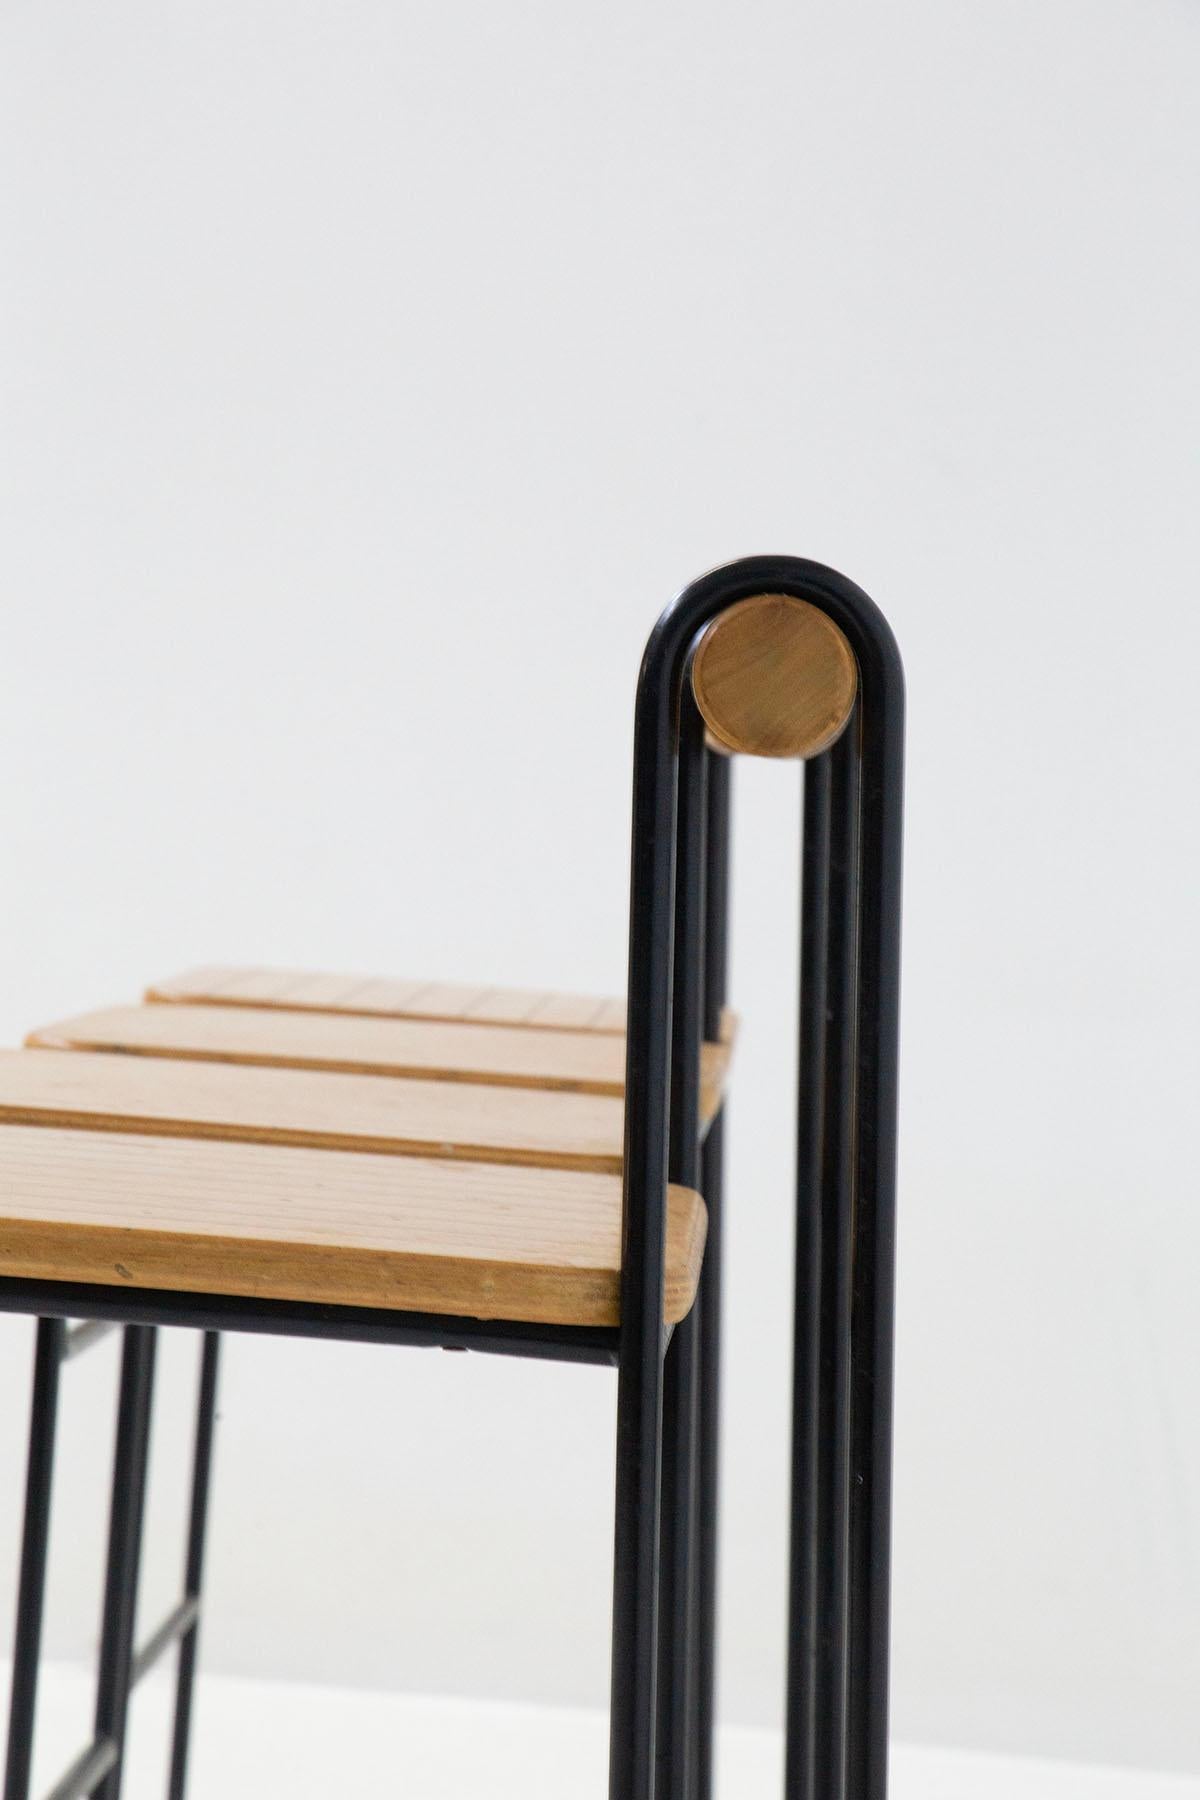 Geometric Italian Modern High Chairs Set of Four in Iron and Wood 10